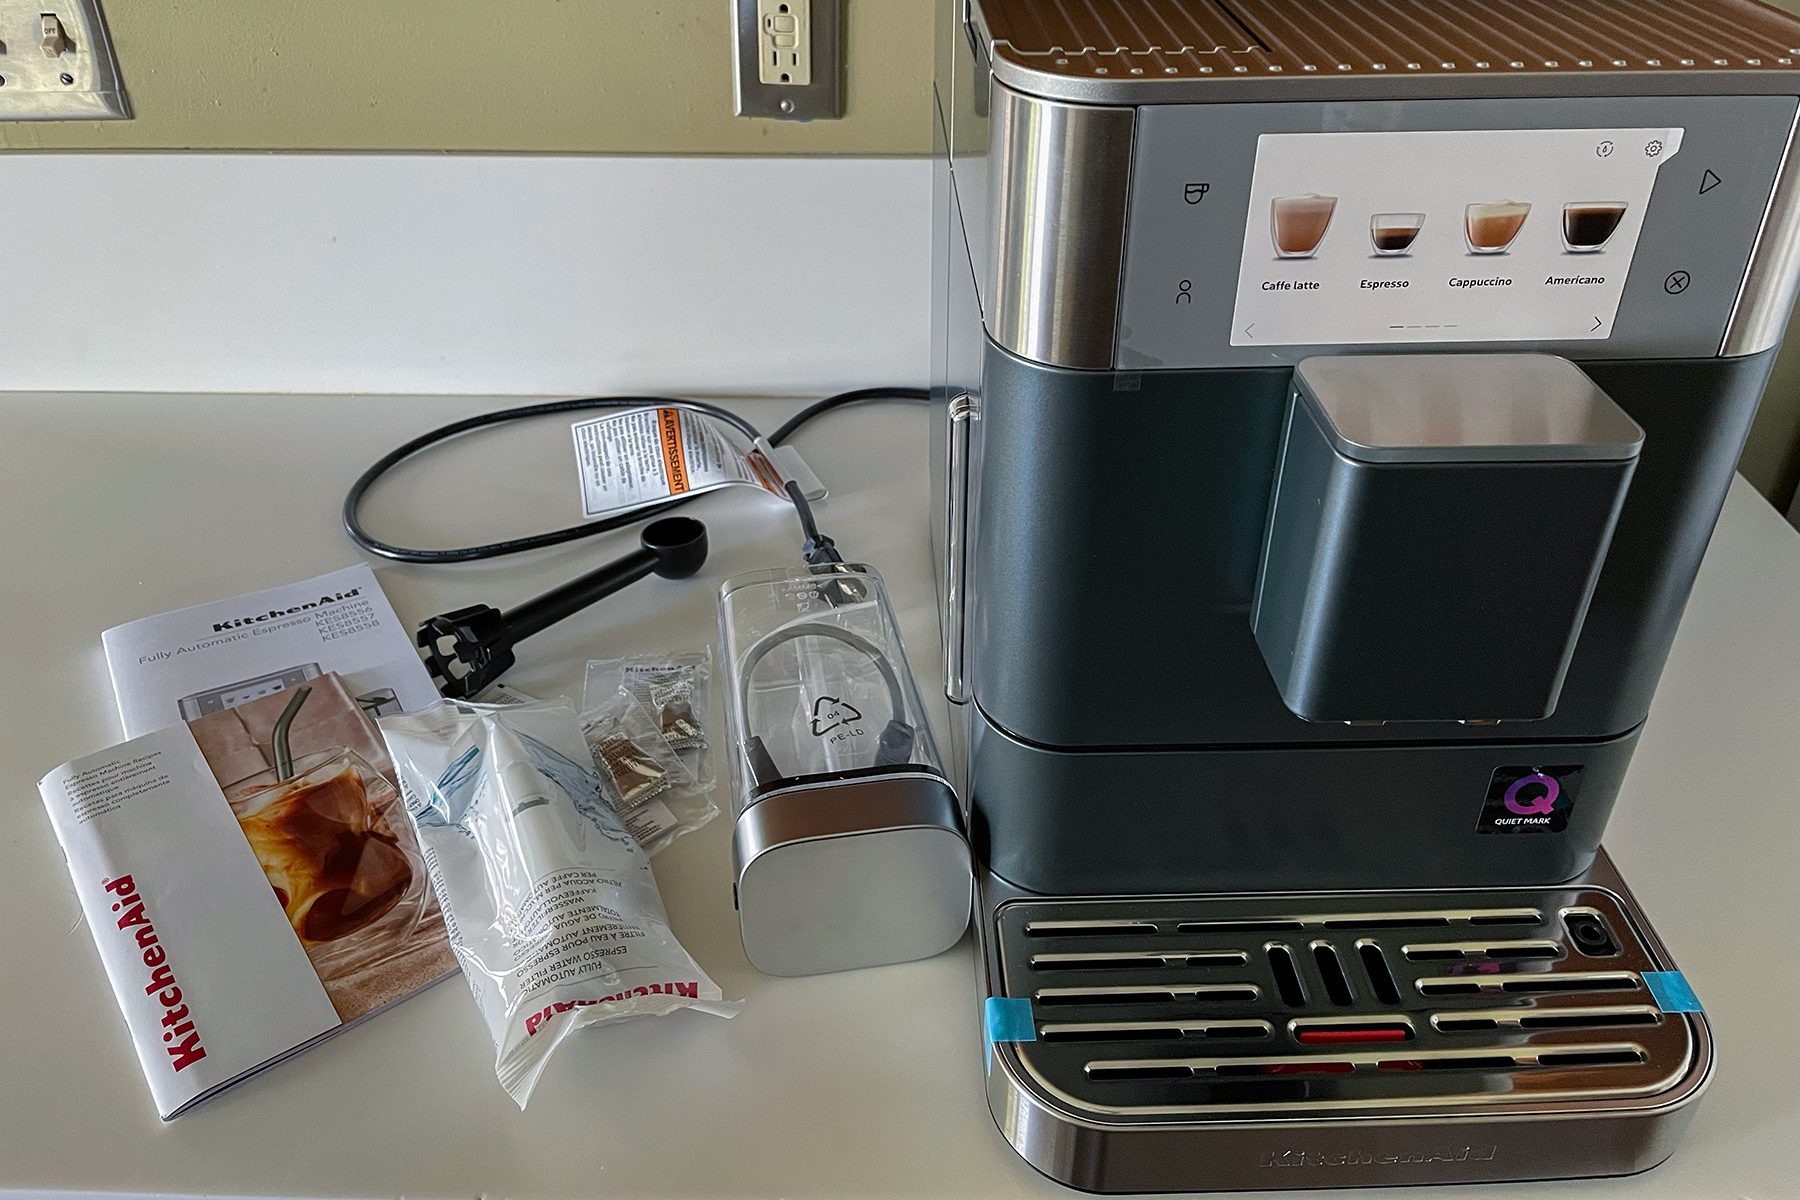 Kitchenaid Fully Automatic Espresso Machine Kf8